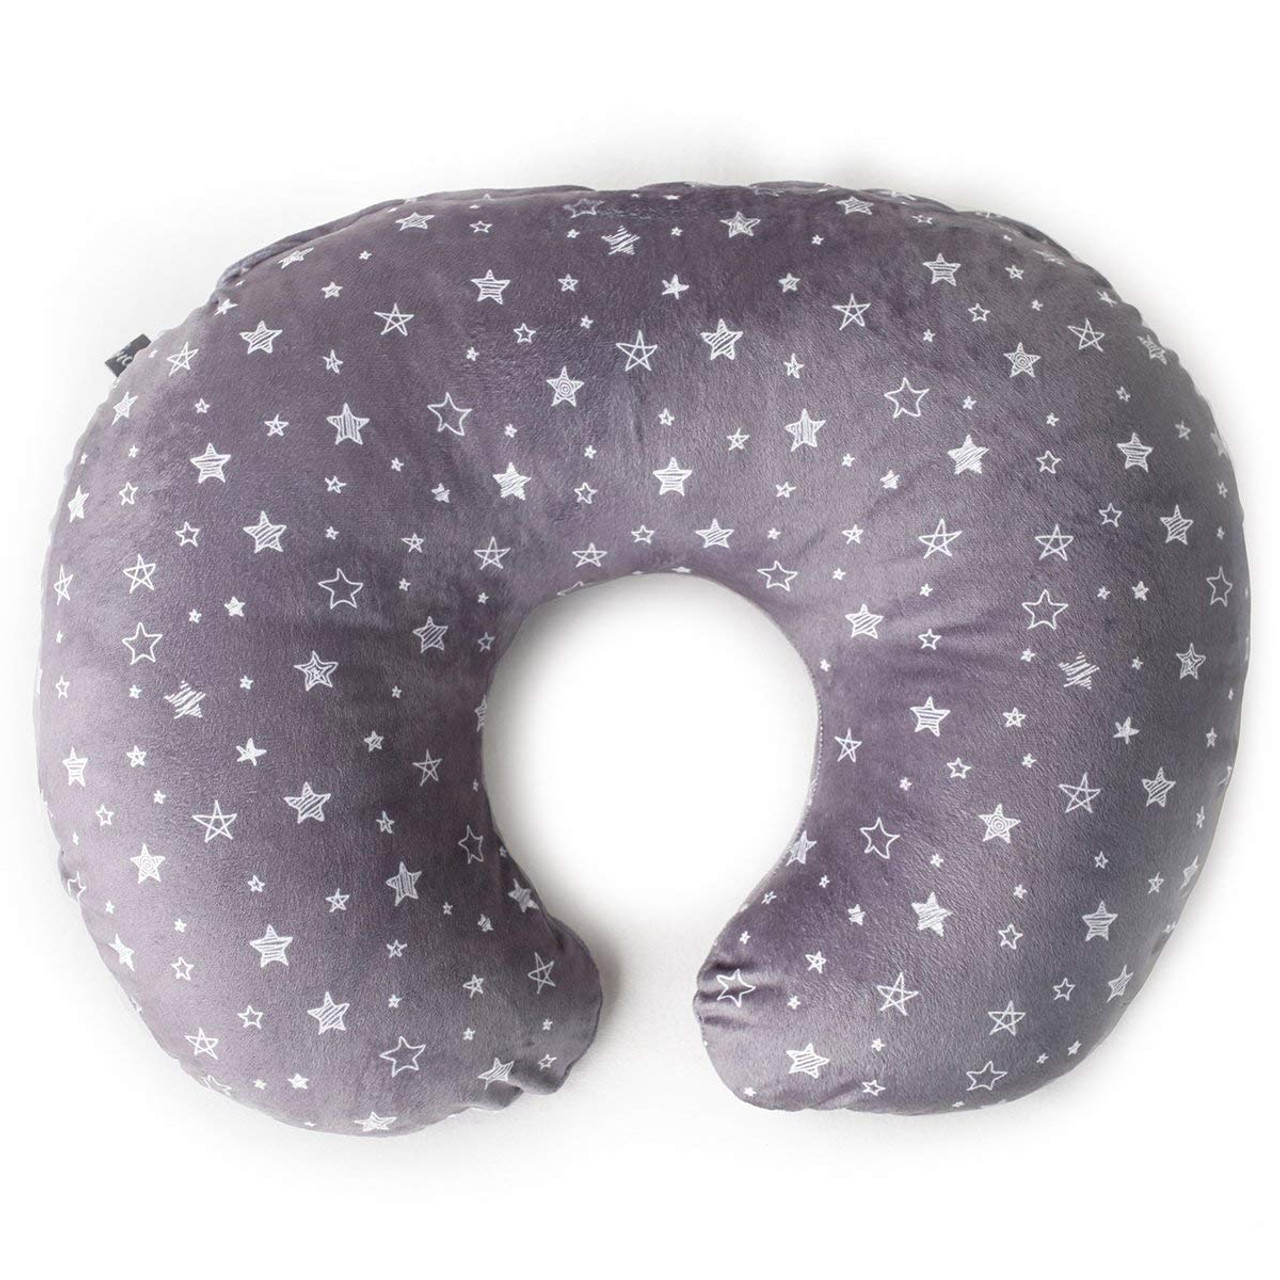 Buy Nursing Pillow - Soft Grey - Breast Feeding